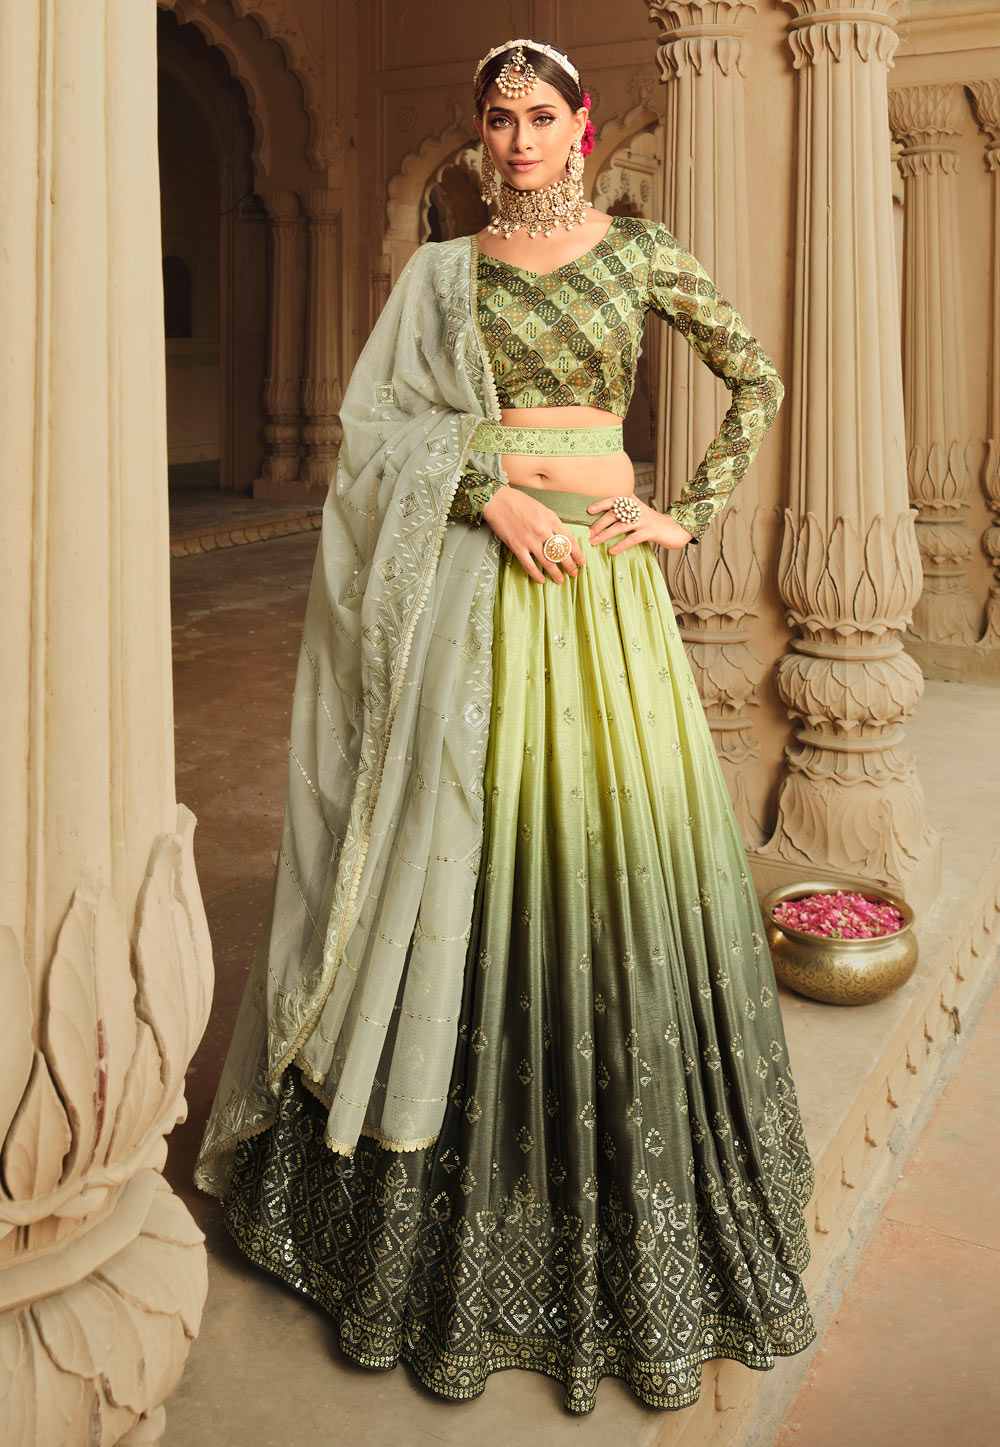 Smashing Olive Green Metalic Foil Work Designer Bollywood Lehenga Choli at  Rs 4995 | ब्राइडल लहंगा चोली in Surat | ID: 21456581397